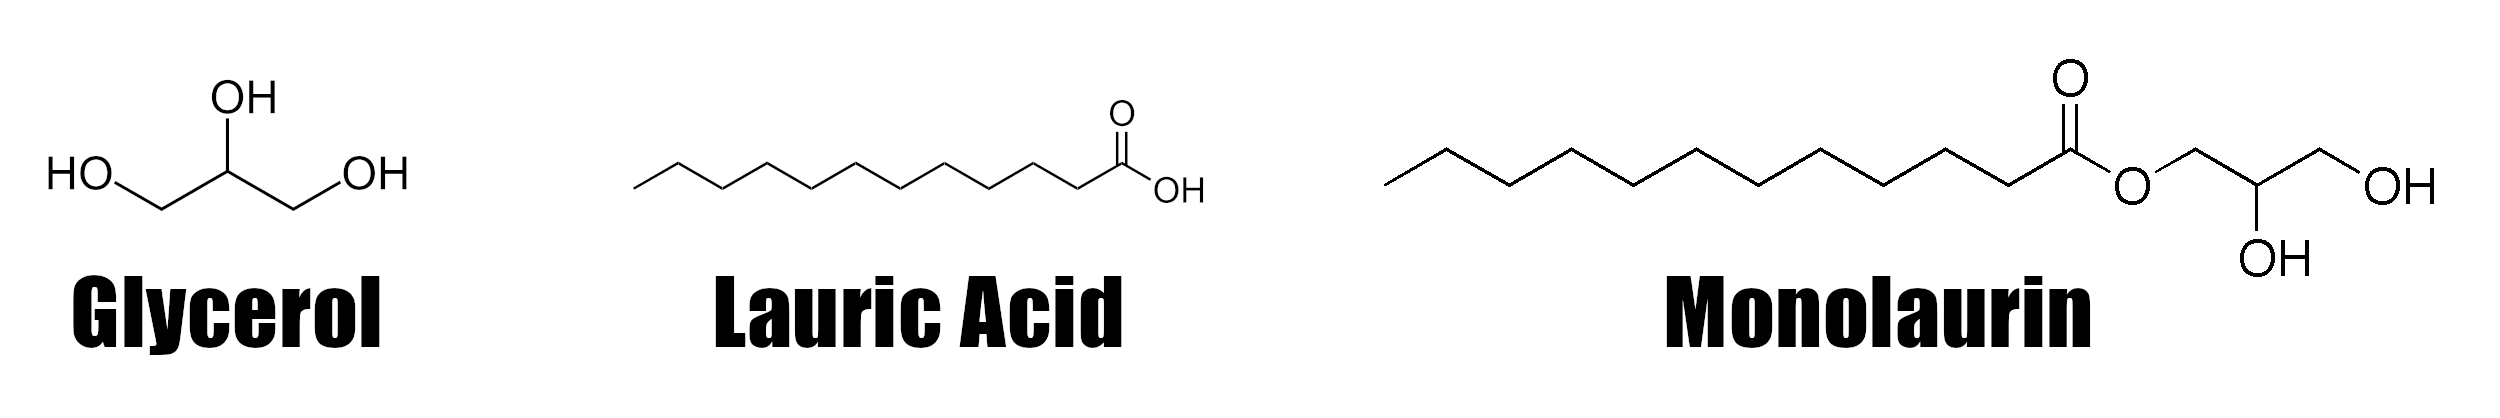 Glycerol Lauric Acid Monolaurin